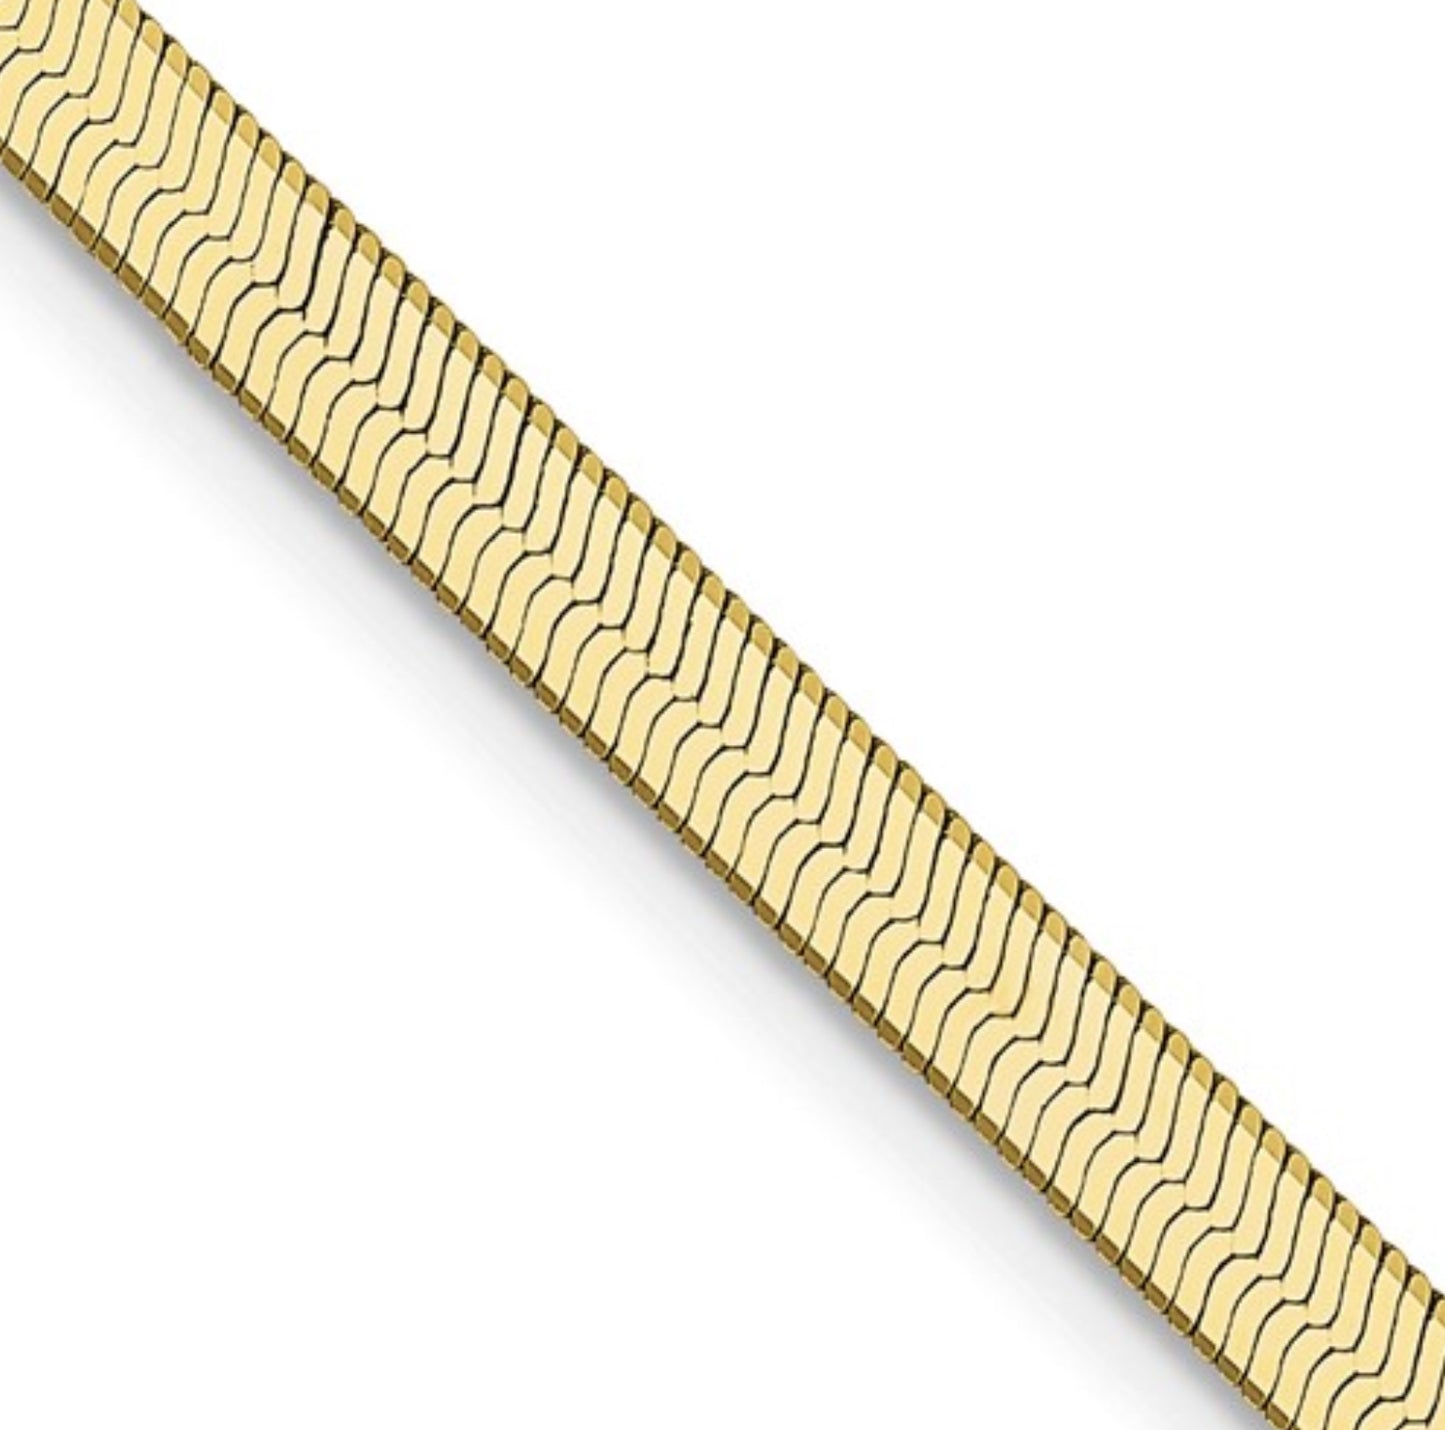 10k 3mm Yellow Gold Silky Herringbone Bracelet